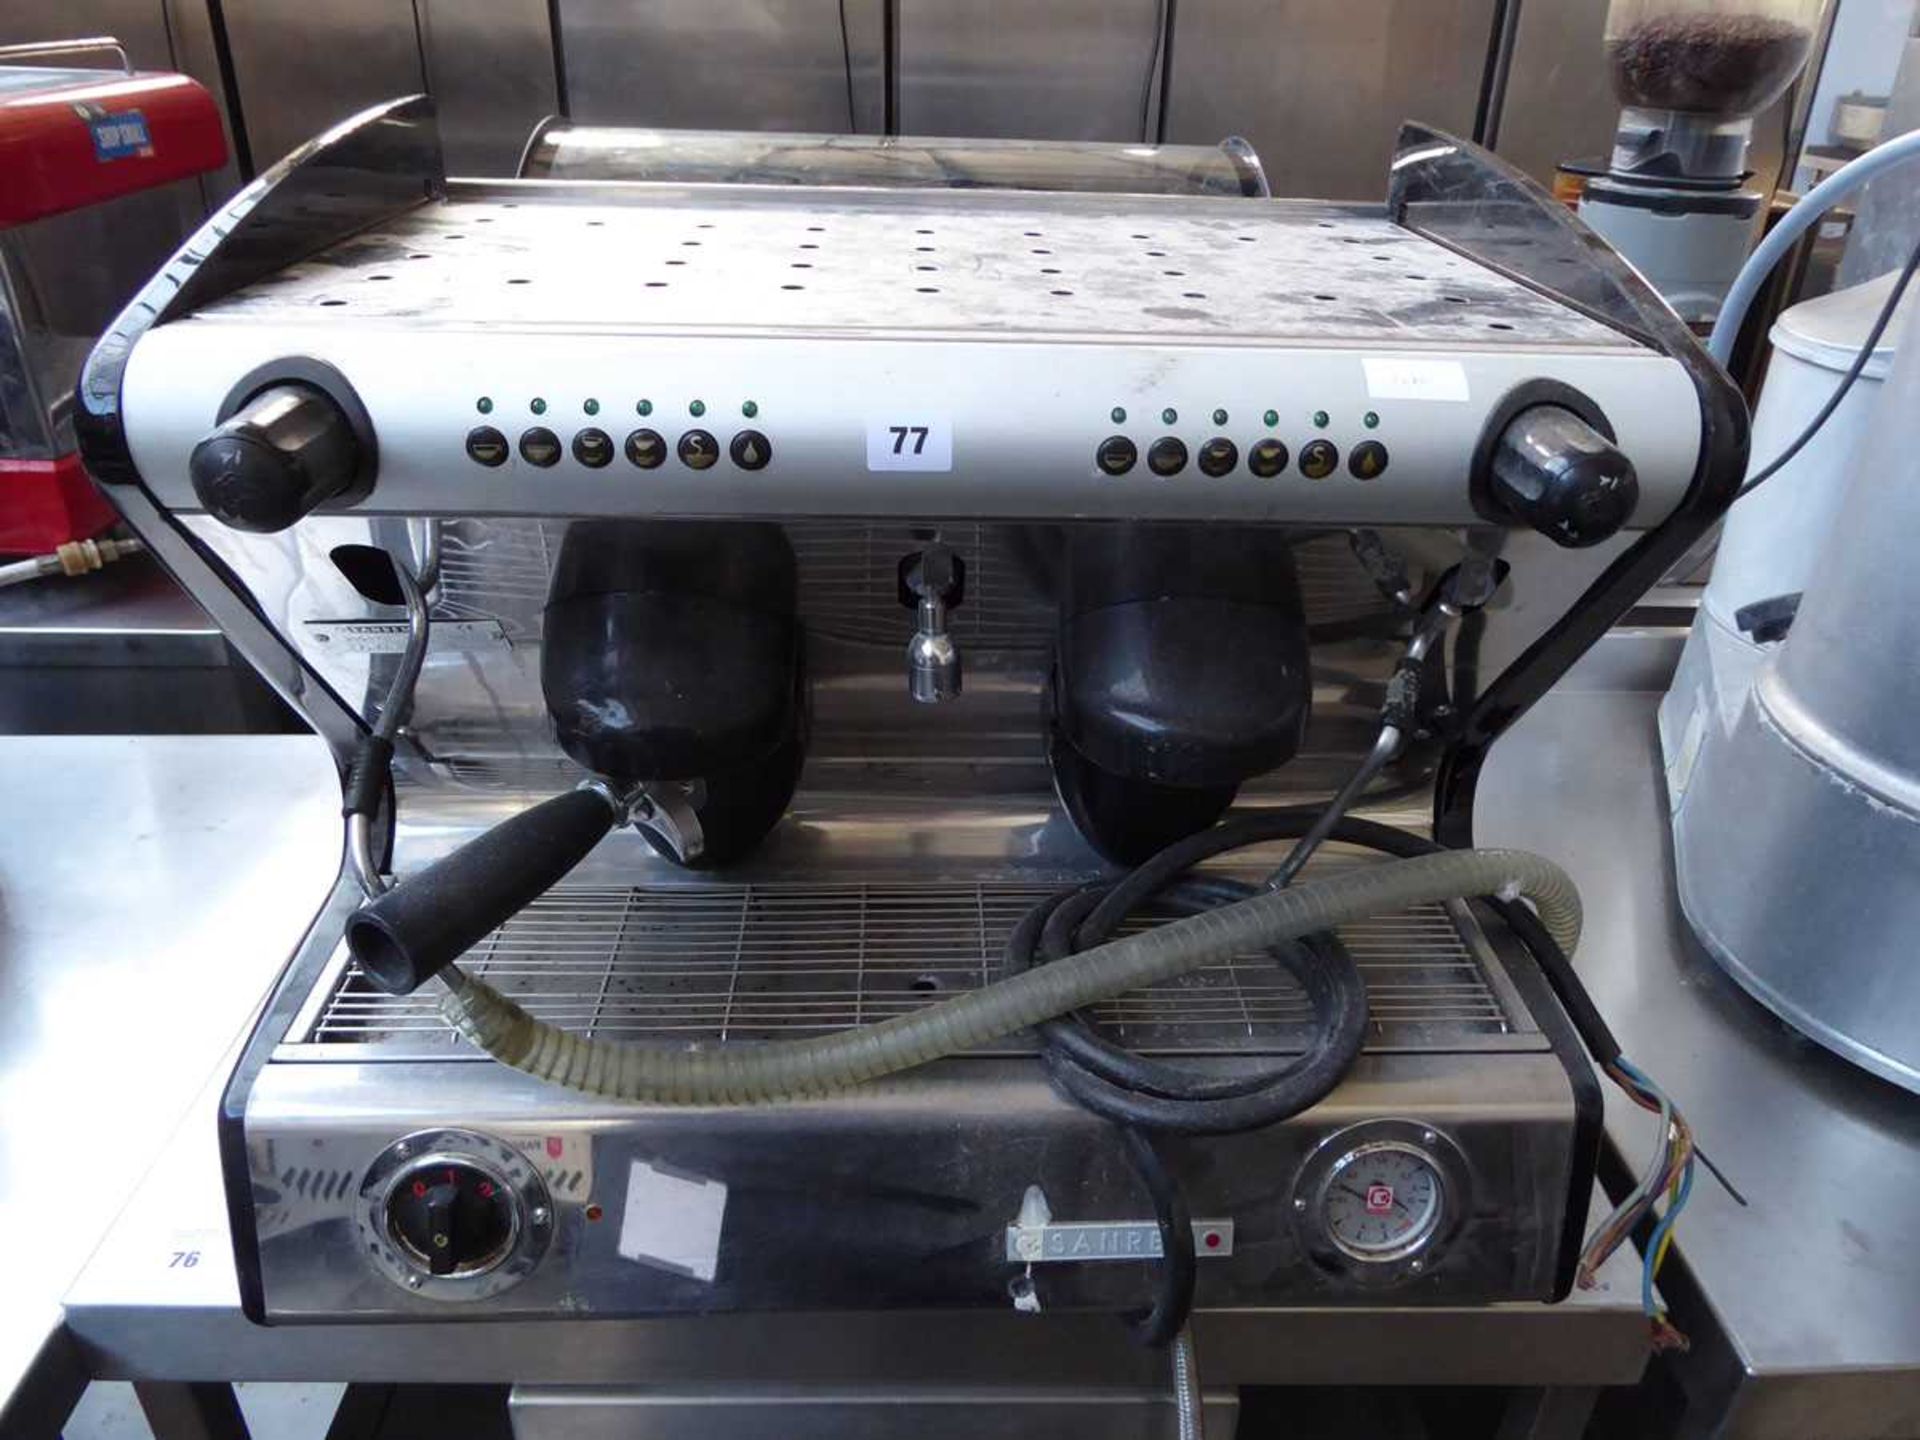 64cm Sanremo 2 group coffee machine with single group head